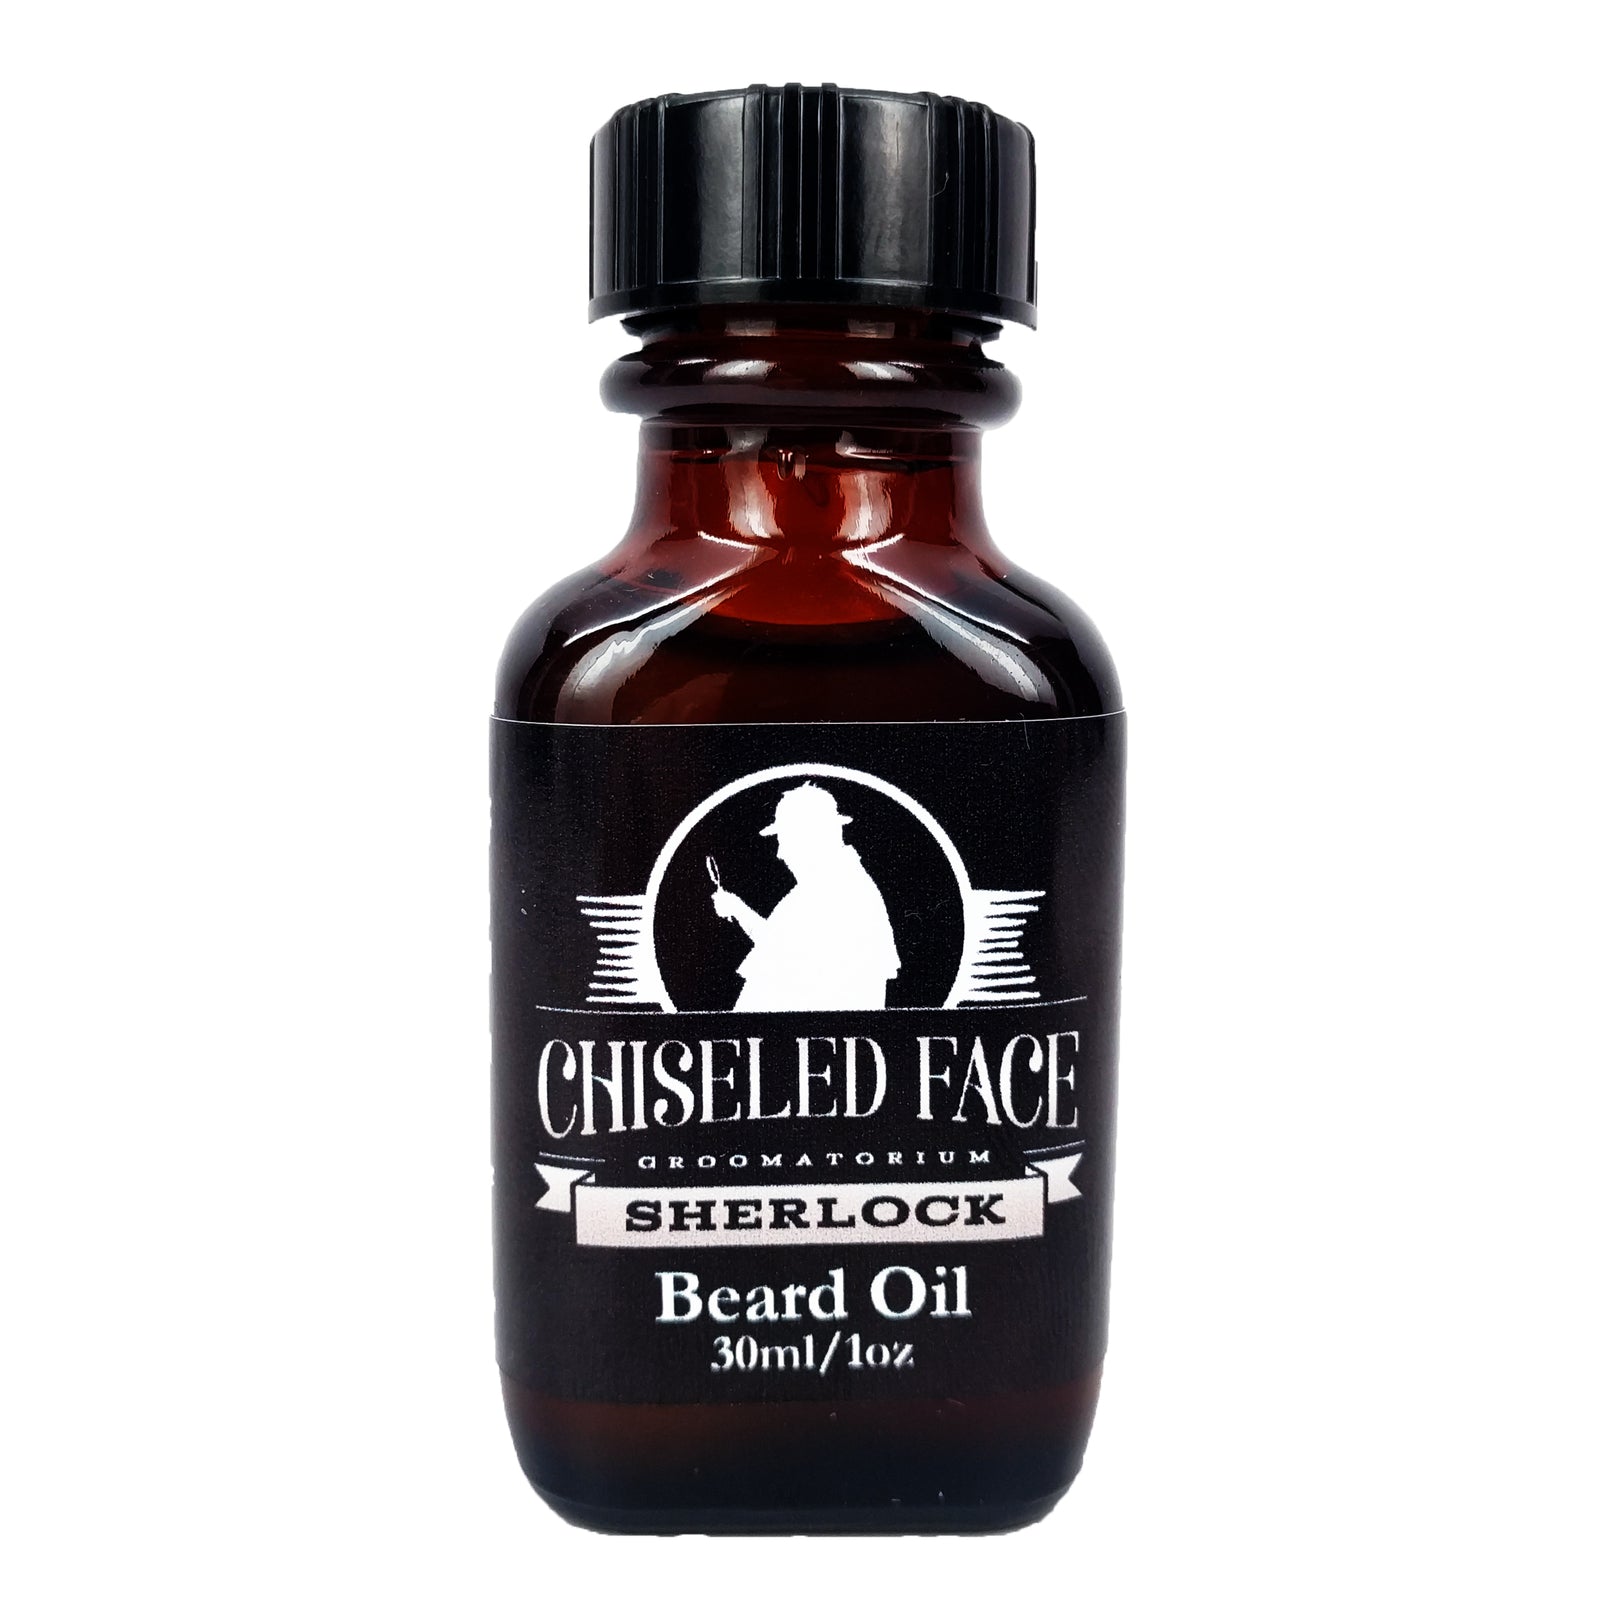 Chiseled Face - Sherlock Beard Oil, 1oz